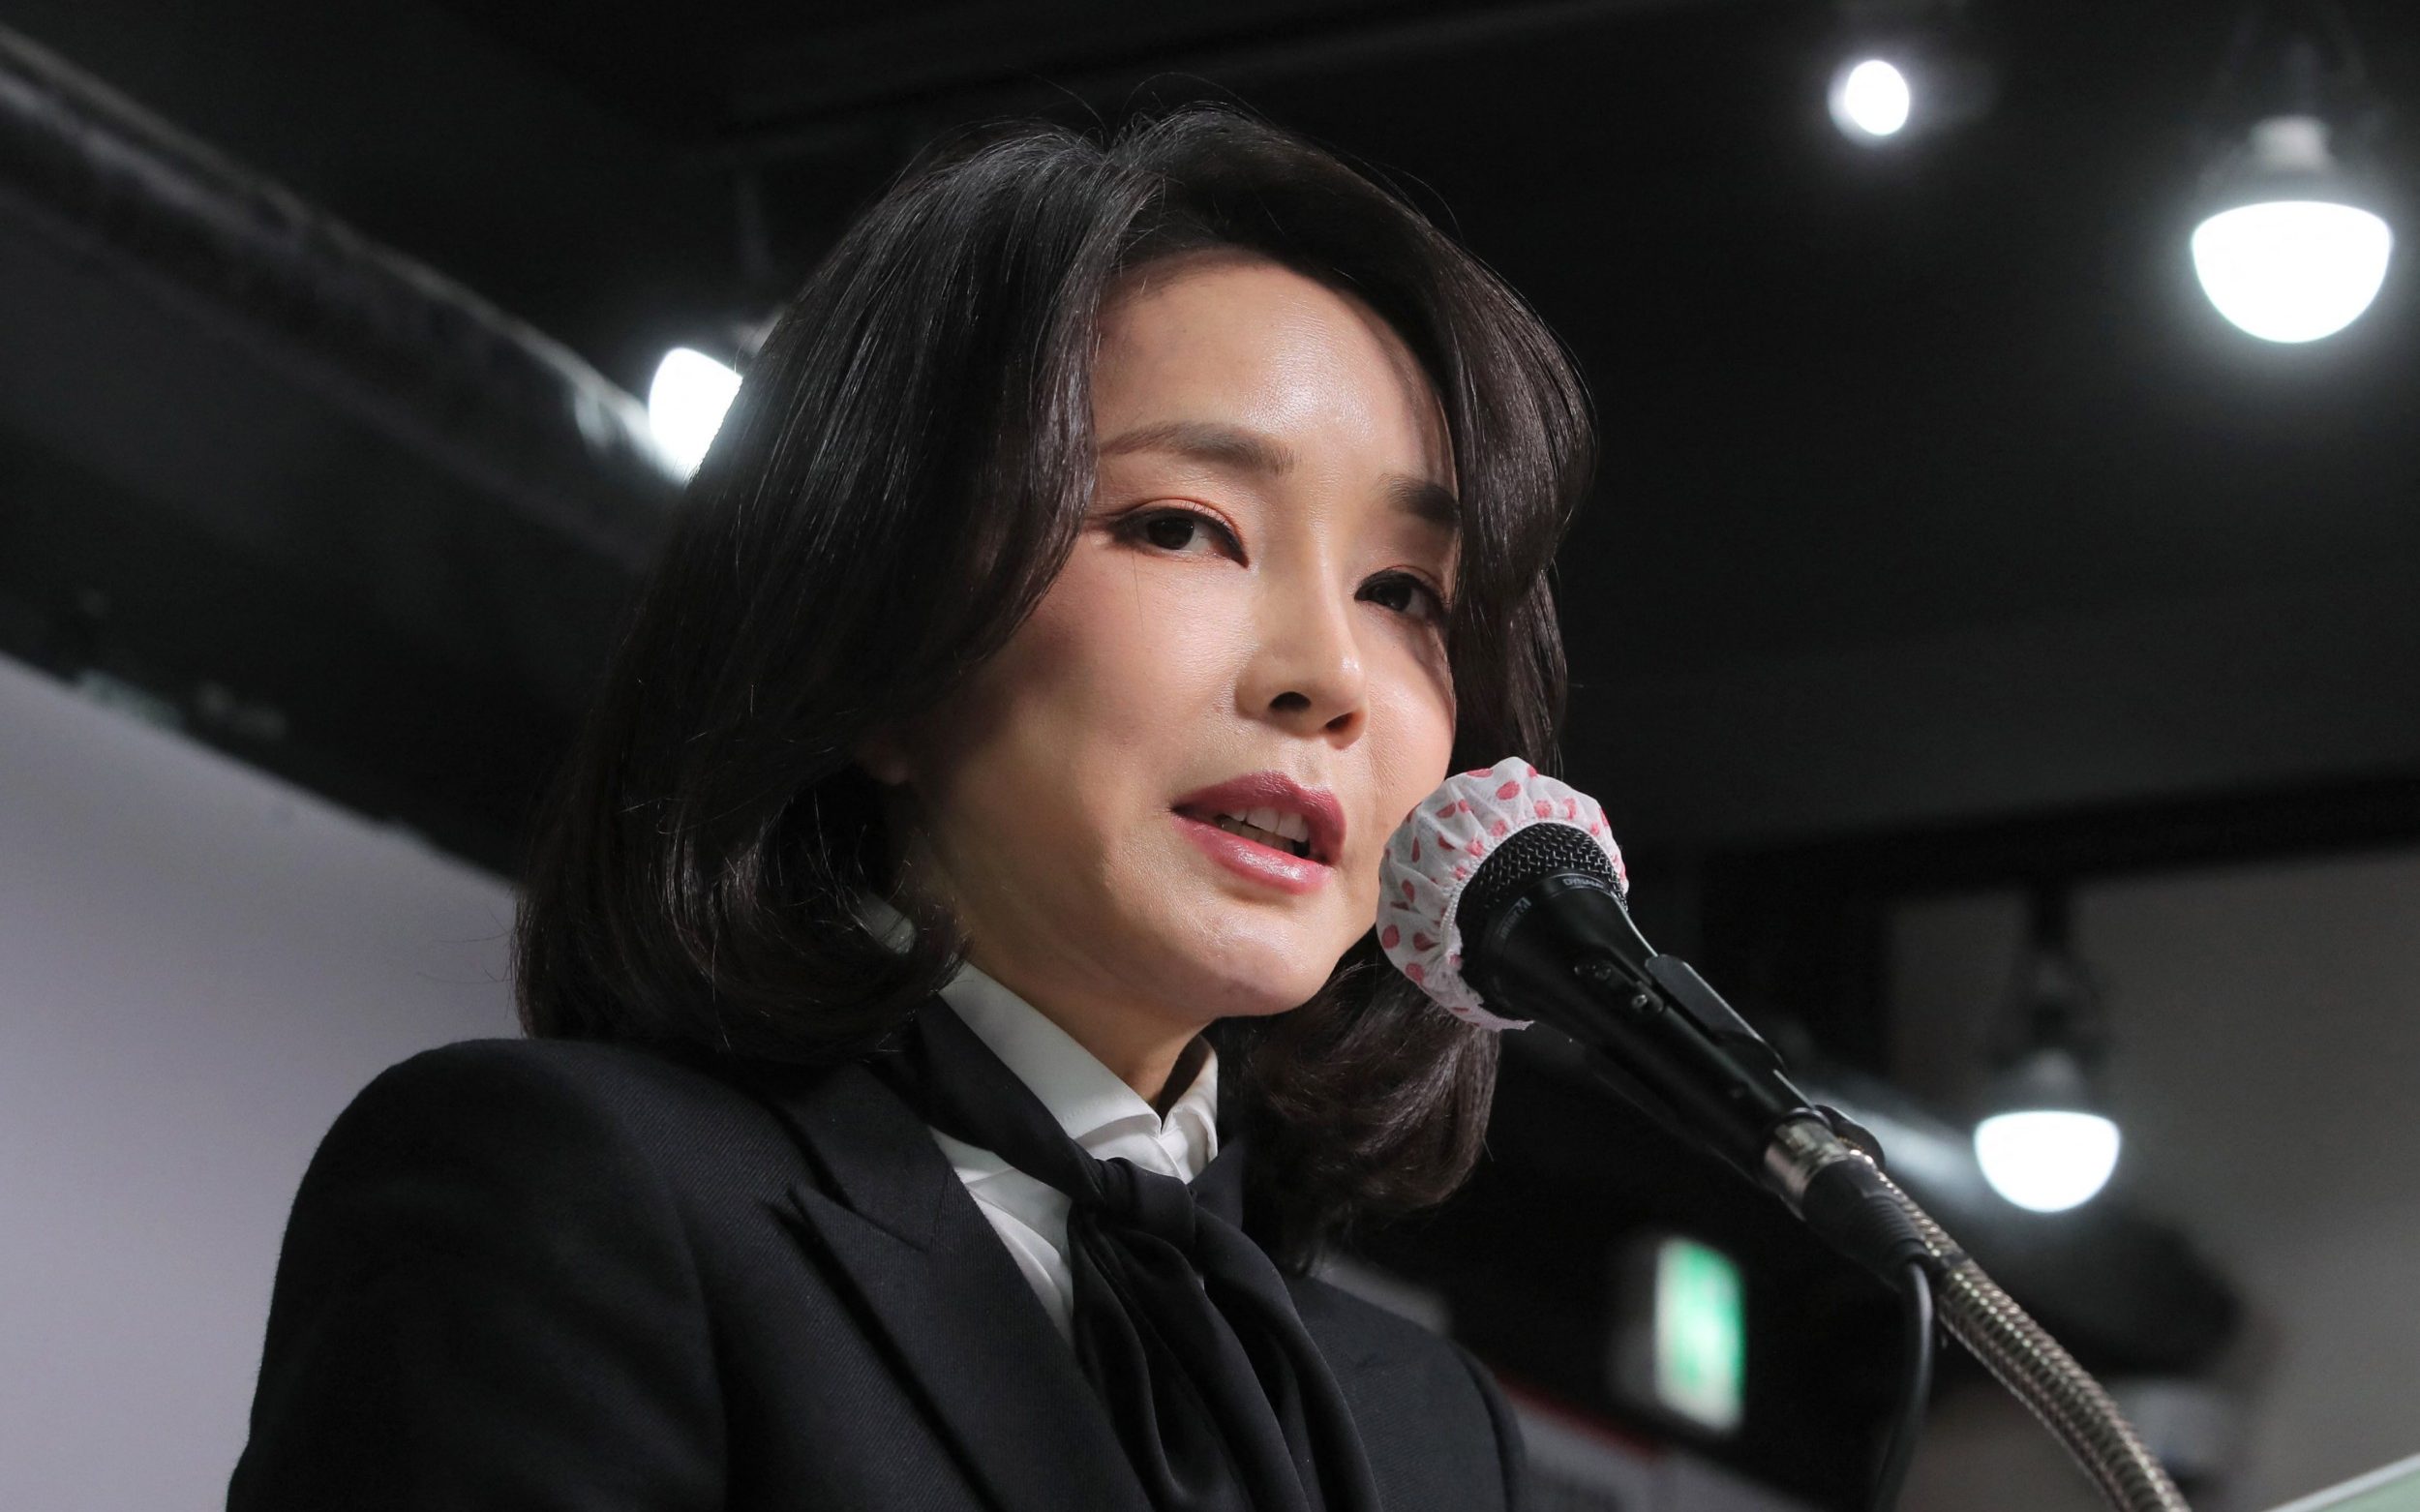 dior bag scandal piles pressure on south korean president